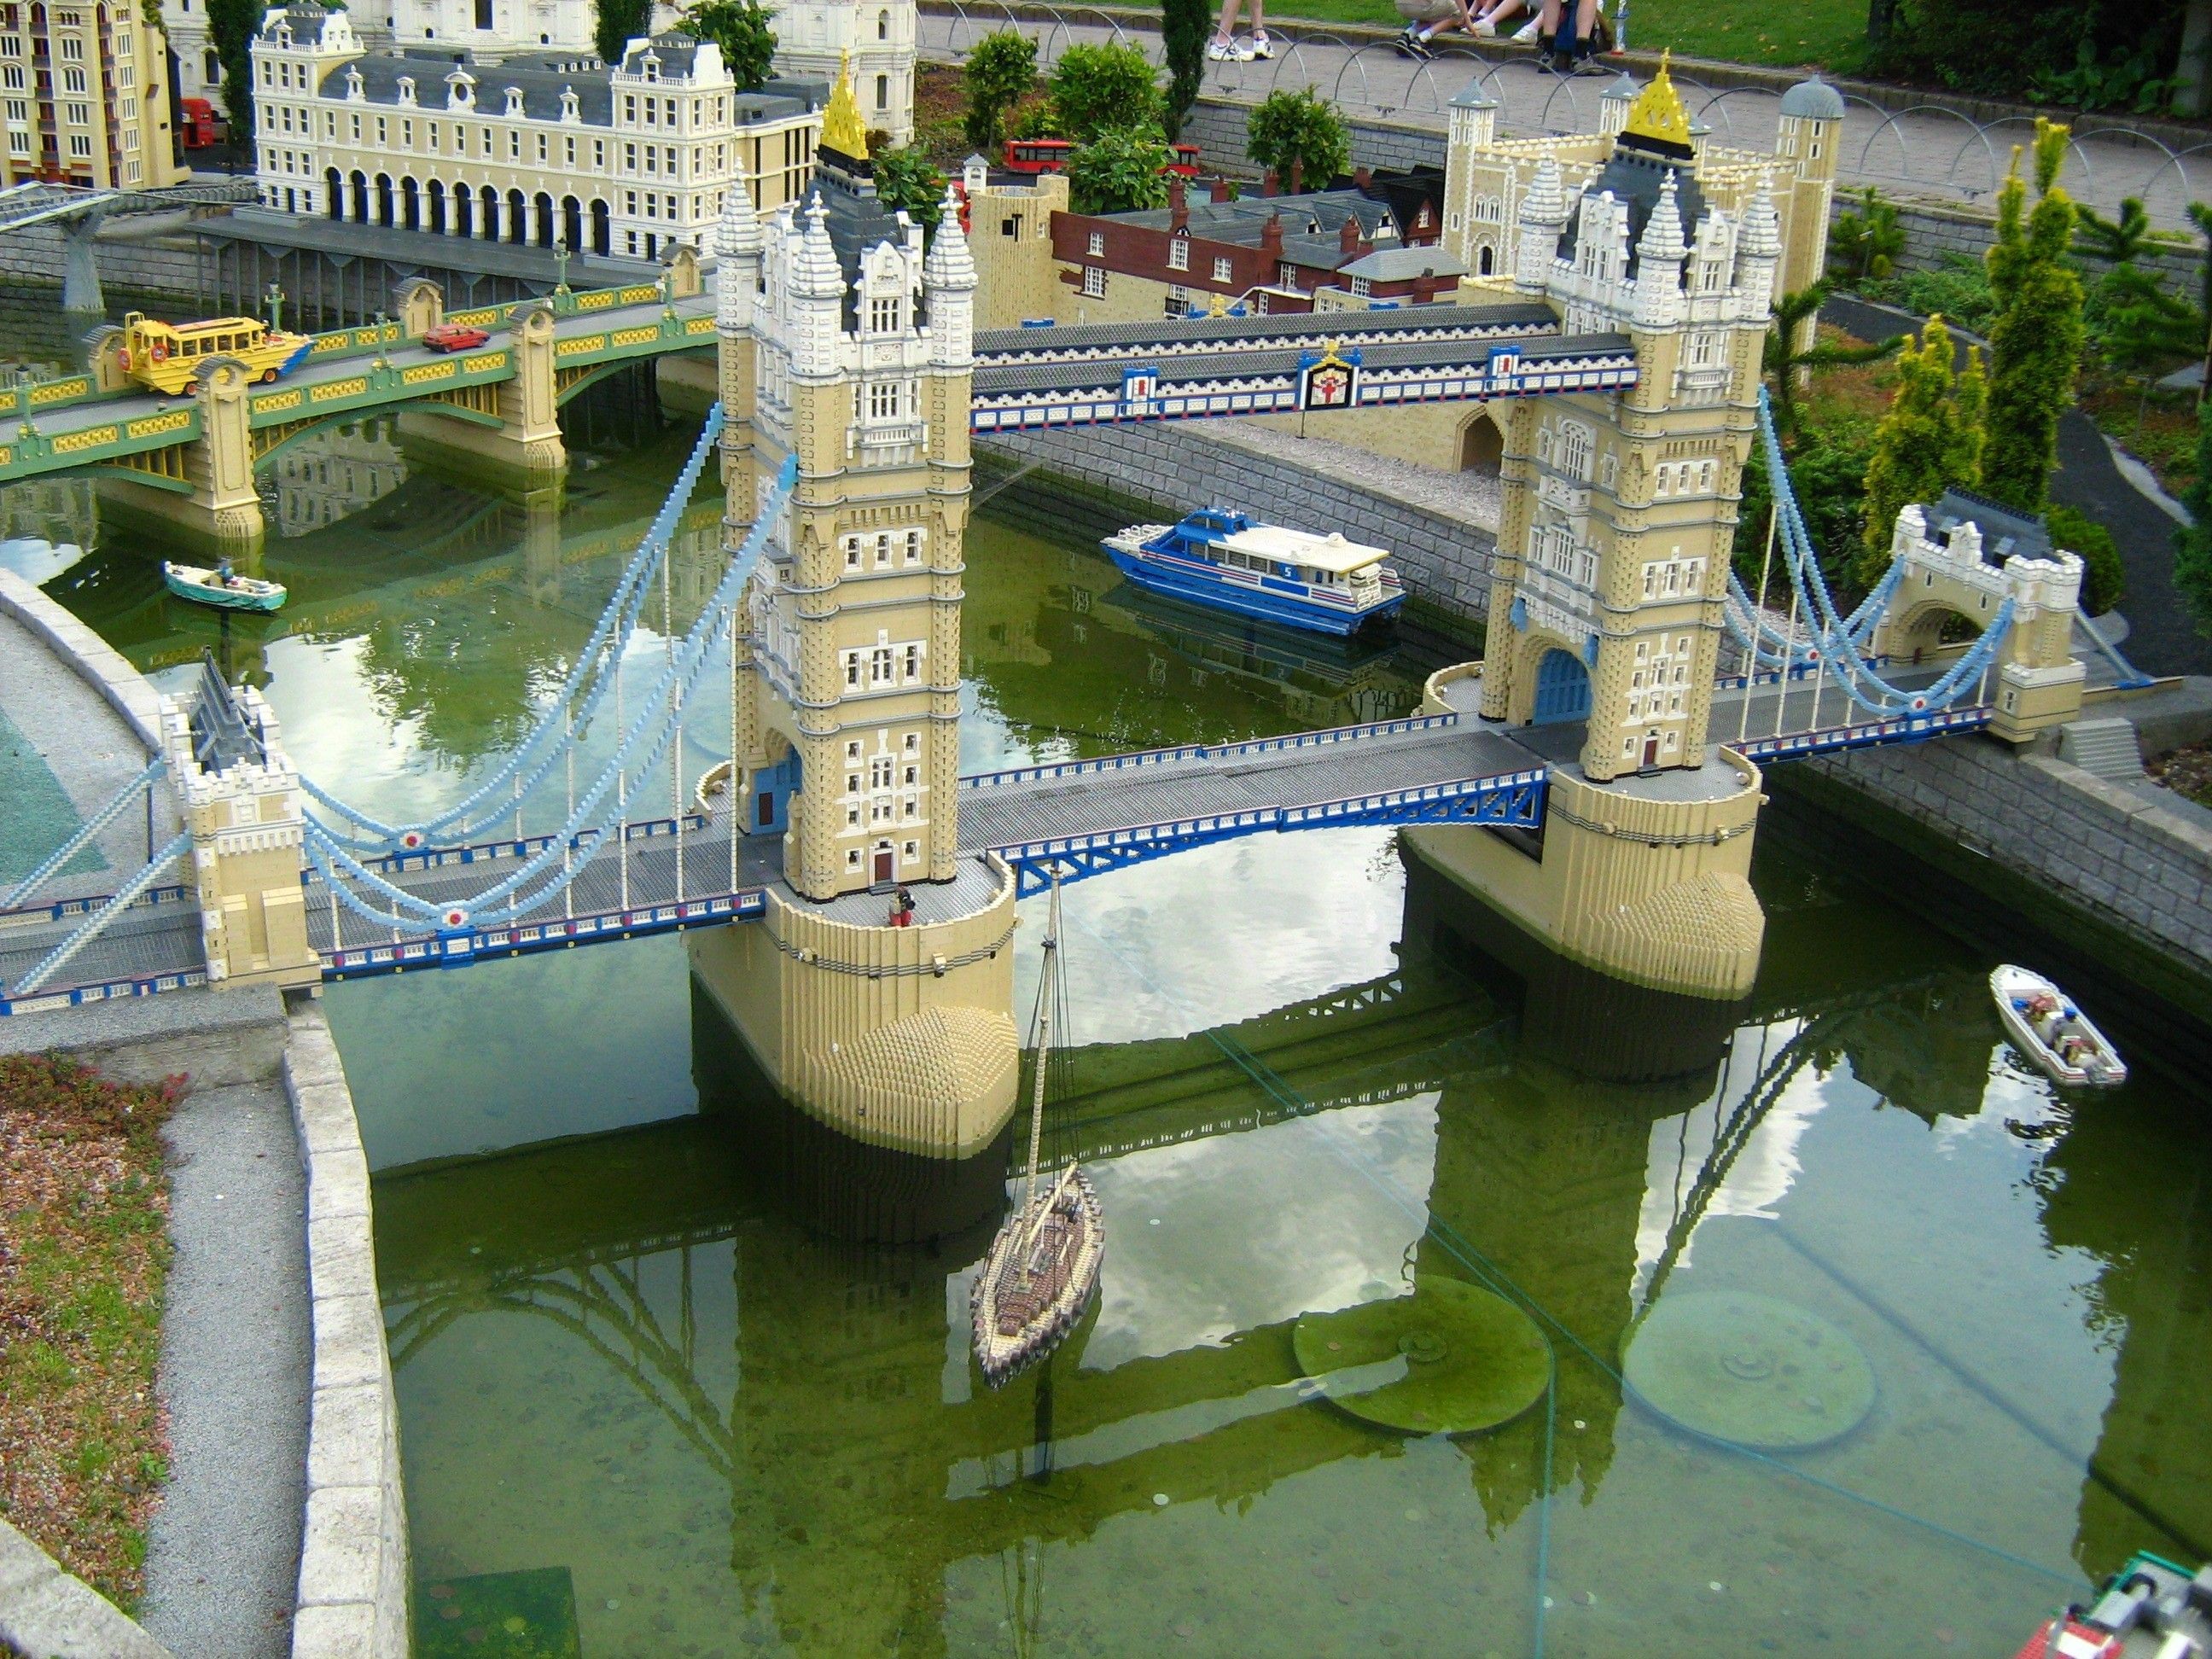 https://upload.wikimedia.org/wikipedia/commons/d/db/Tower_Bridge_in_Miniland,_Legoland_Windsor.JPG